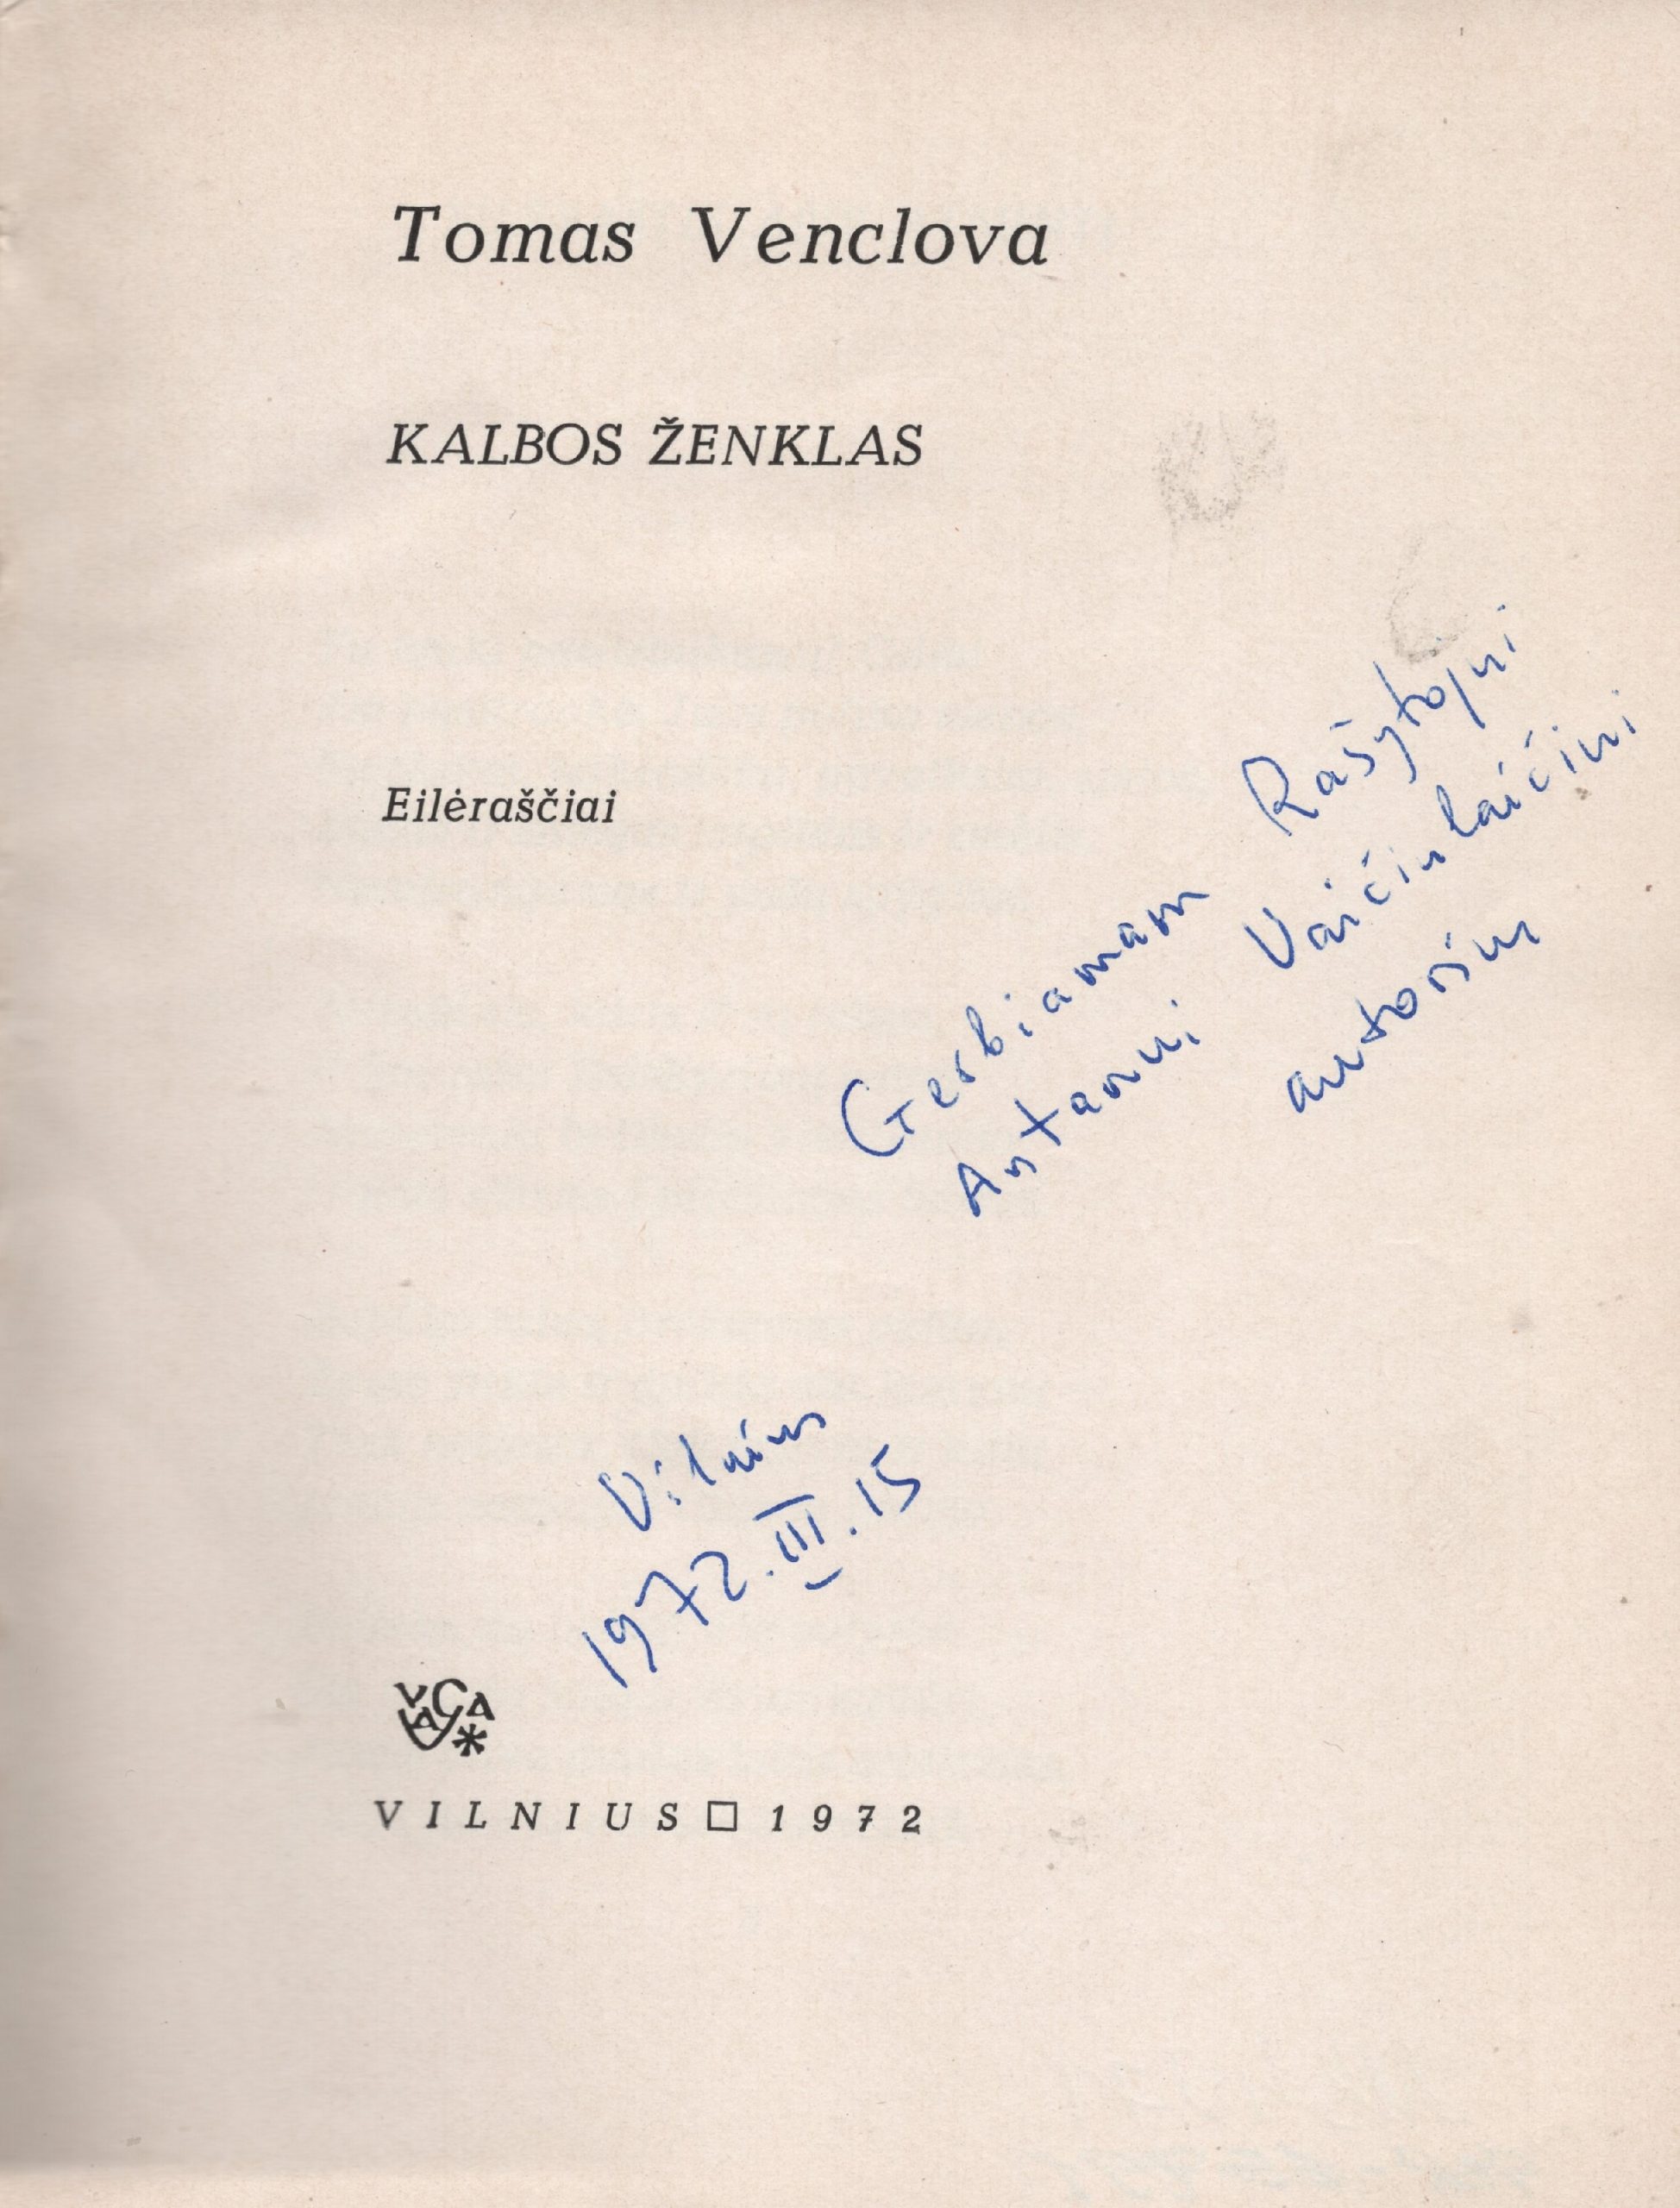 T. Venclova „Kalbos ženklas“. Titulinis puslapis su dedikacija A. Vaičiulaičiui. Vilnius, 1972 m. kovo 15 d. MLLM 65791 2